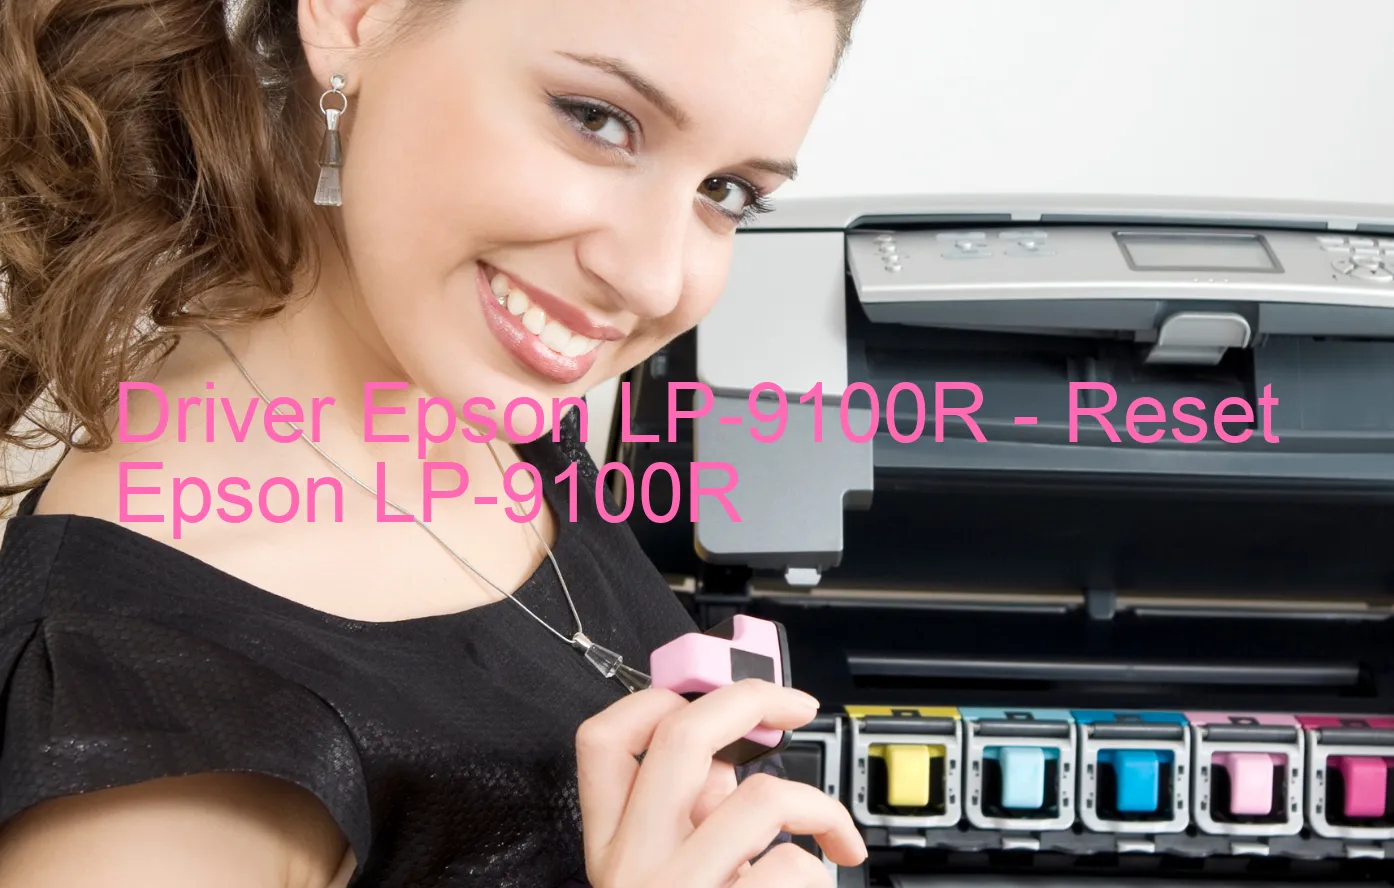 Epson LP-9100Rのドライバー、Epson LP-9100Rのリセットソフトウェア